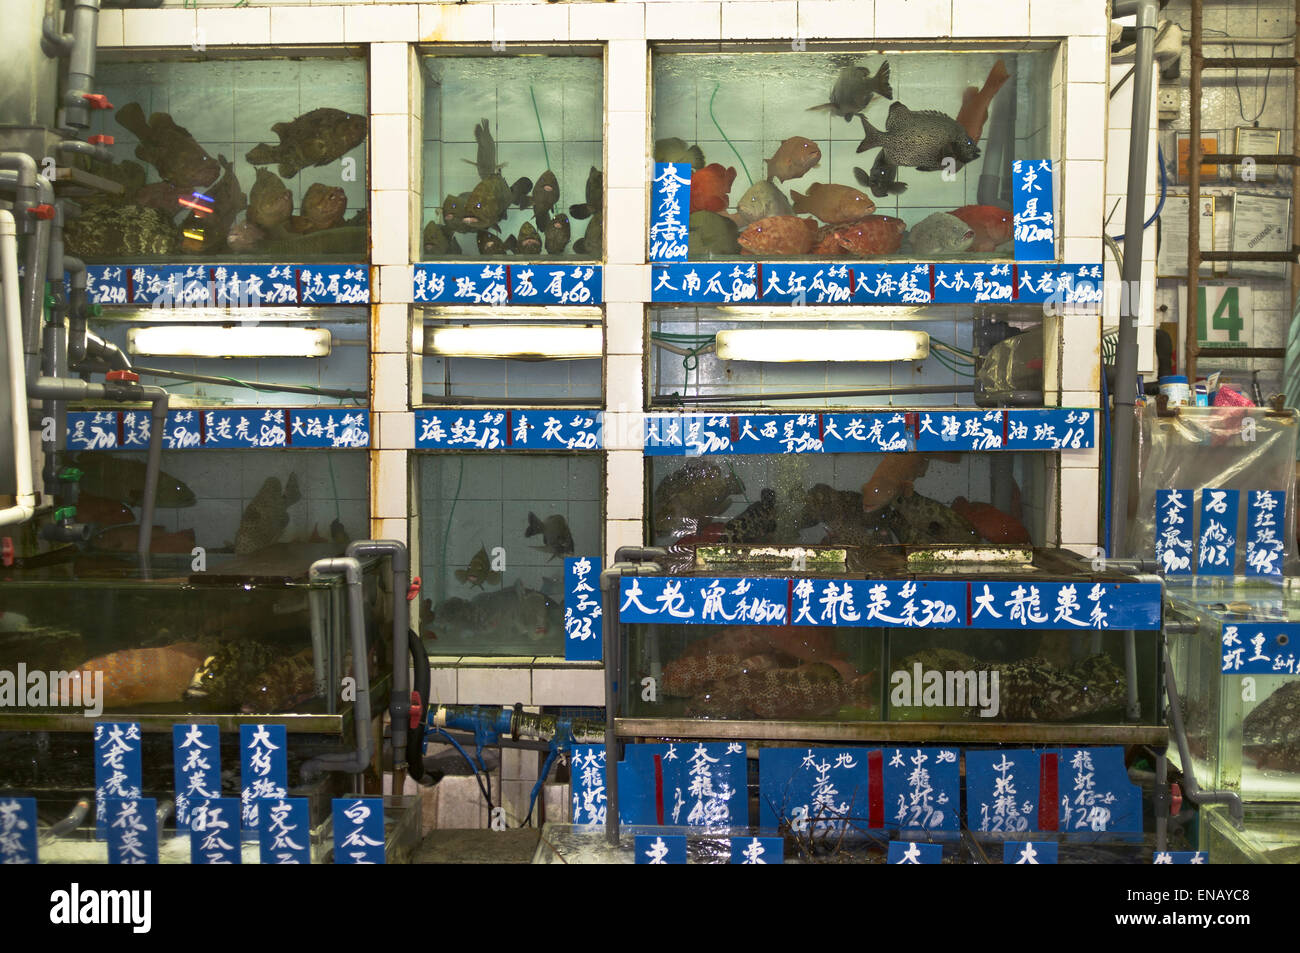 Dh pesce serbatoio MARKET HONG KONG Hong kong mercato del pesce pesce per serbatoi di vendita in Cina Foto Stock